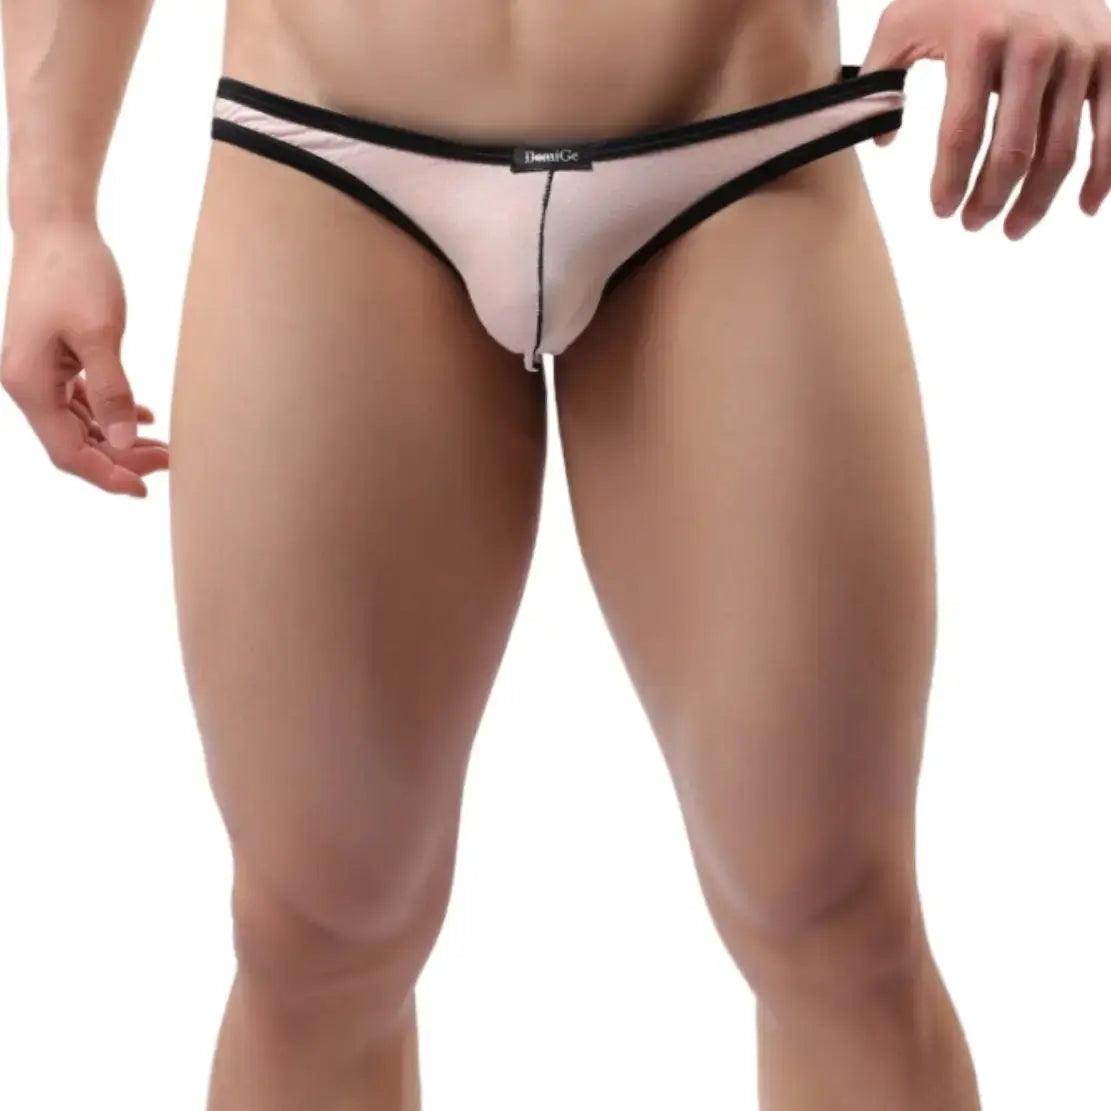 Men's Cotton Stretch Briefs with Contoured Pouch and Semi-Full Coverage Design Male Underwear - His Inwear